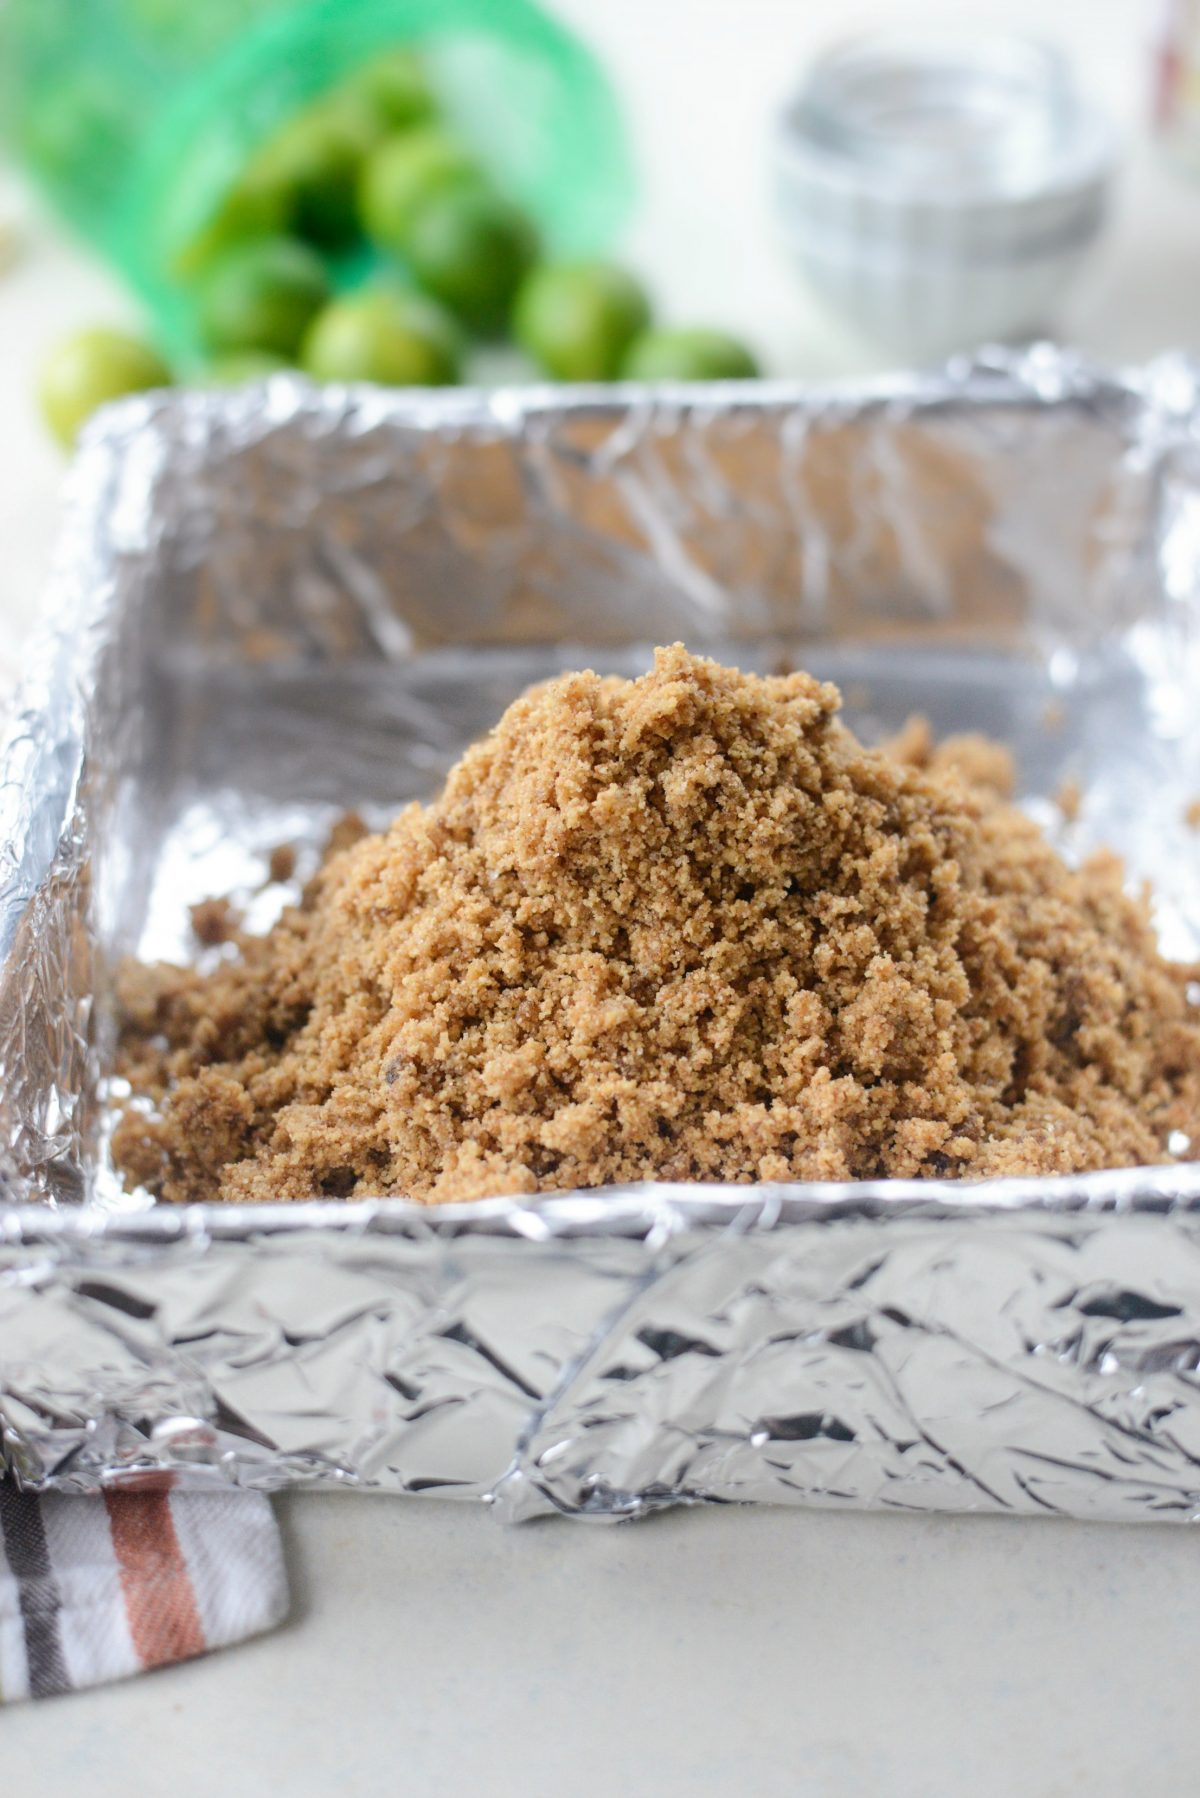 add crumb mixture to prepared pan.